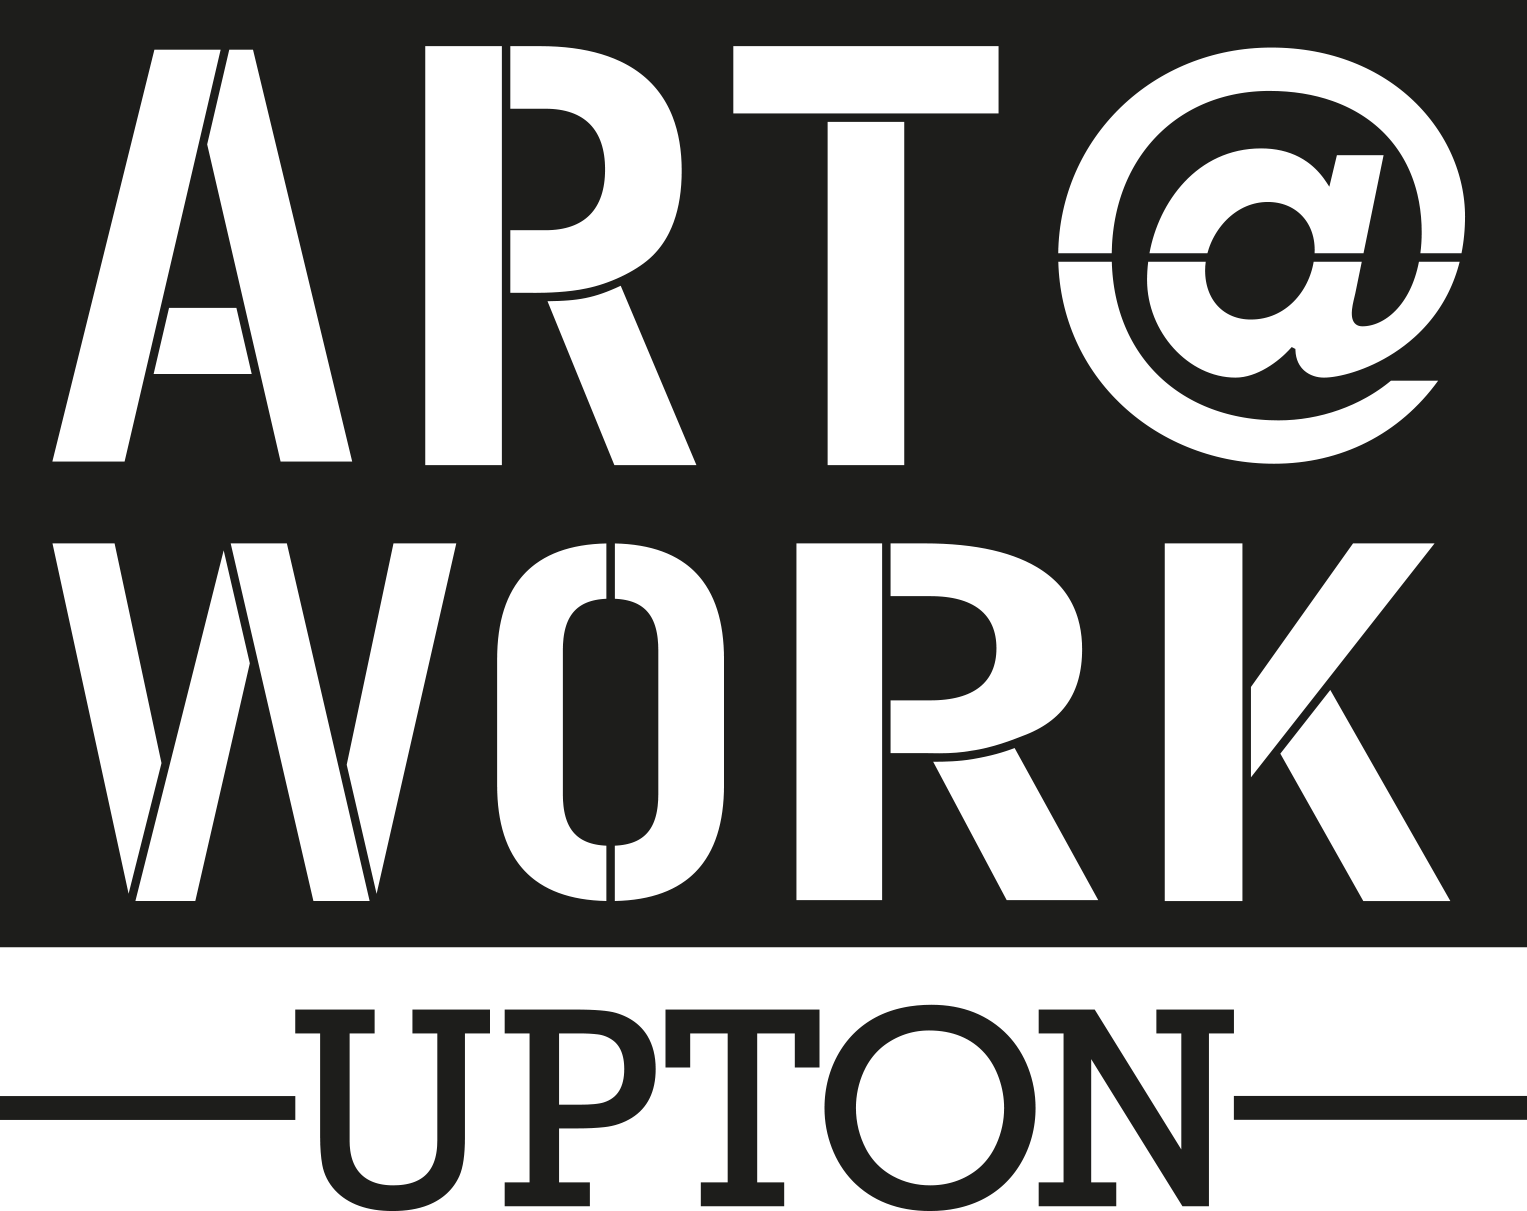 ART@WORK_UPTONlogo-2